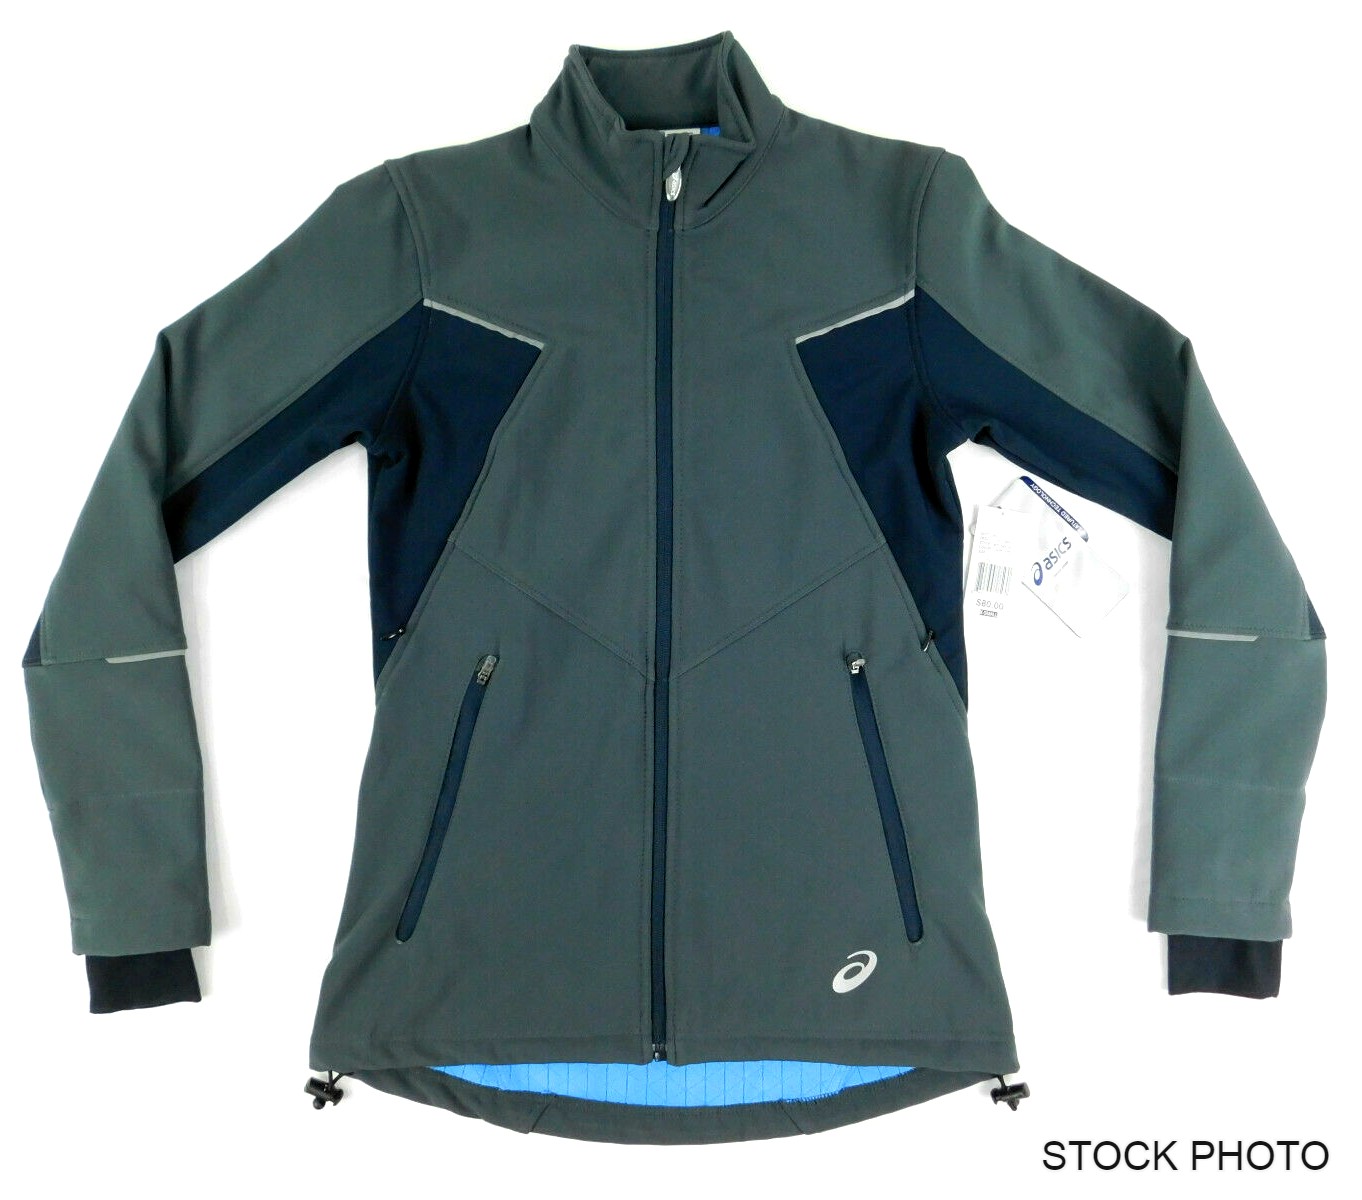 Asics Women's Ultra Waterproof Soft Shell Running Jacket, Dark Gray, Medium - image 1 of 6